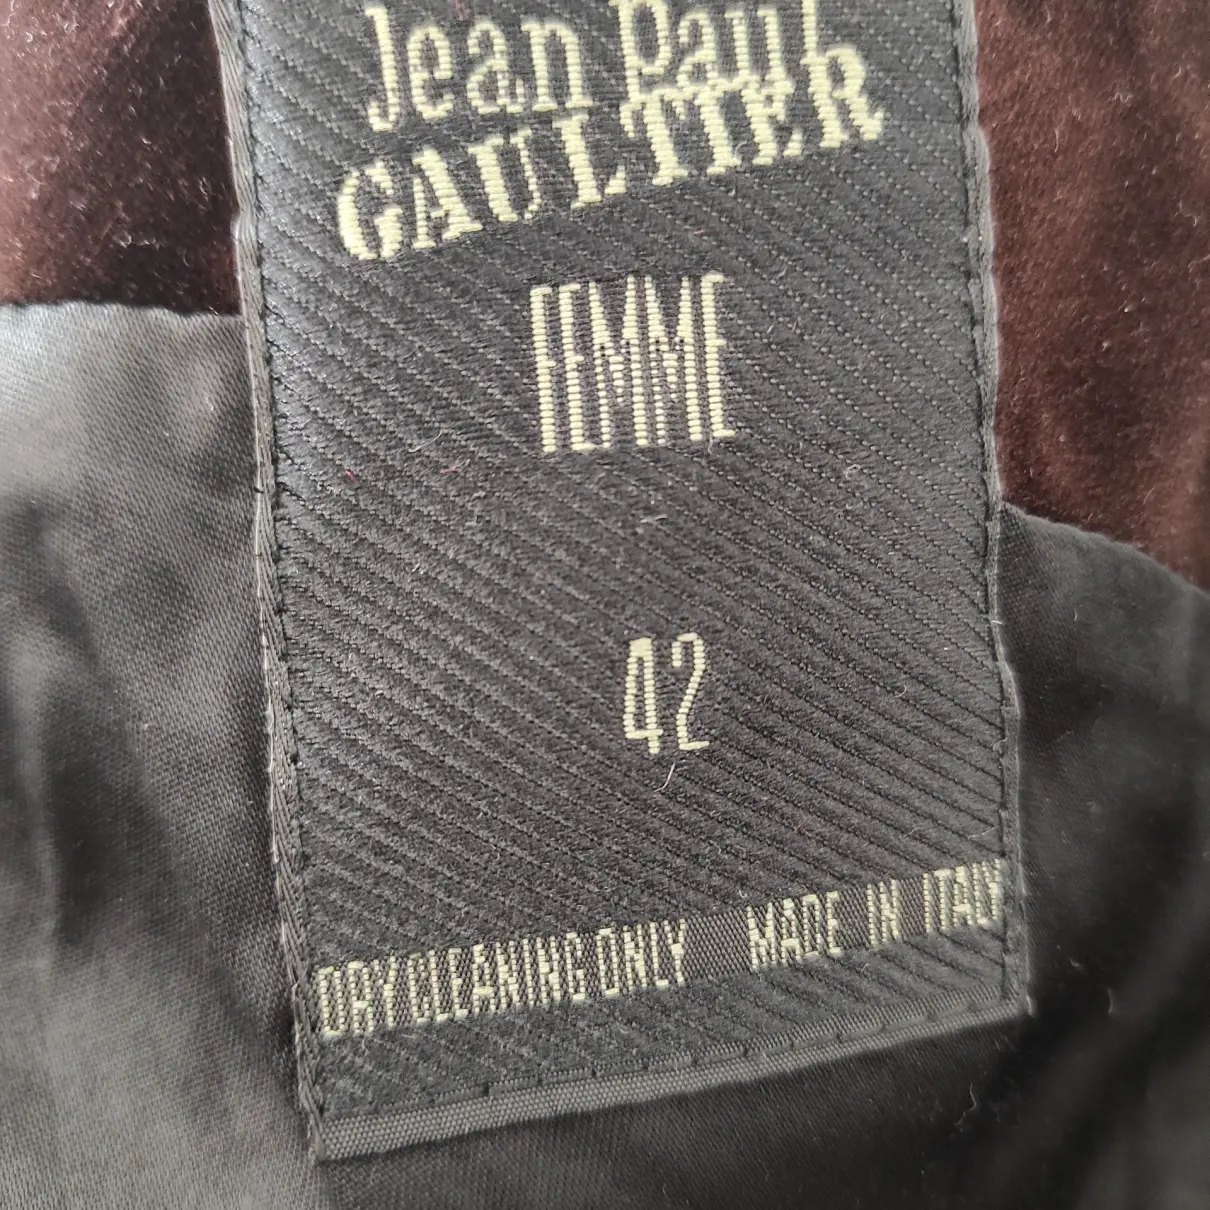 Wool coat Jean Paul Gaultier - Vintage